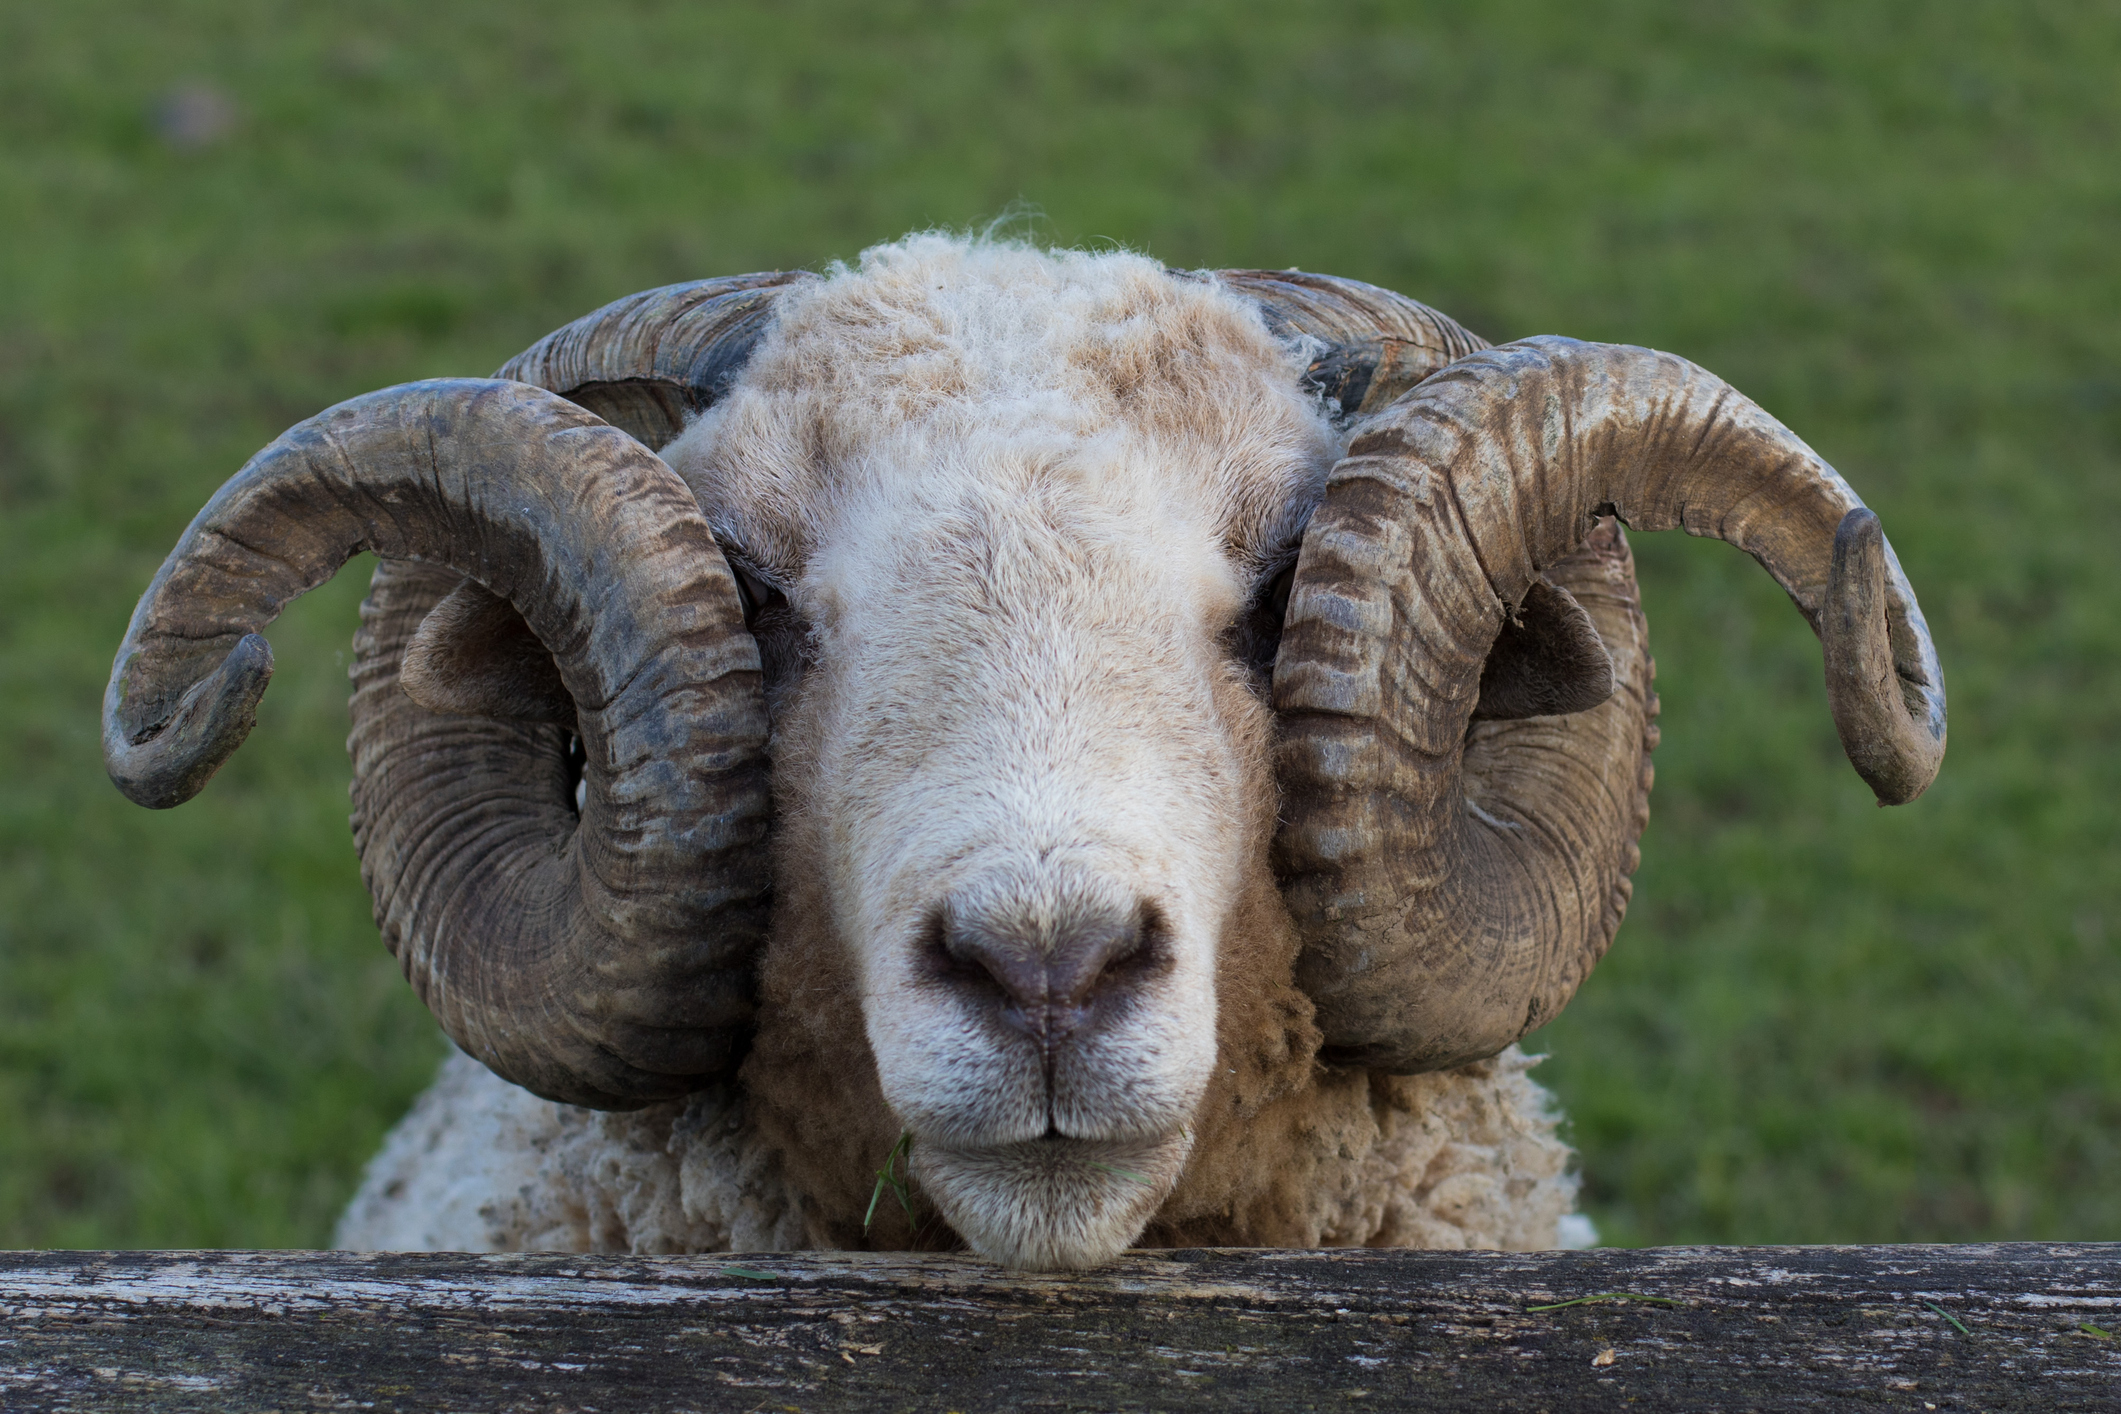 Aggressive sheep kills New Zealand couple, leaving community shocked